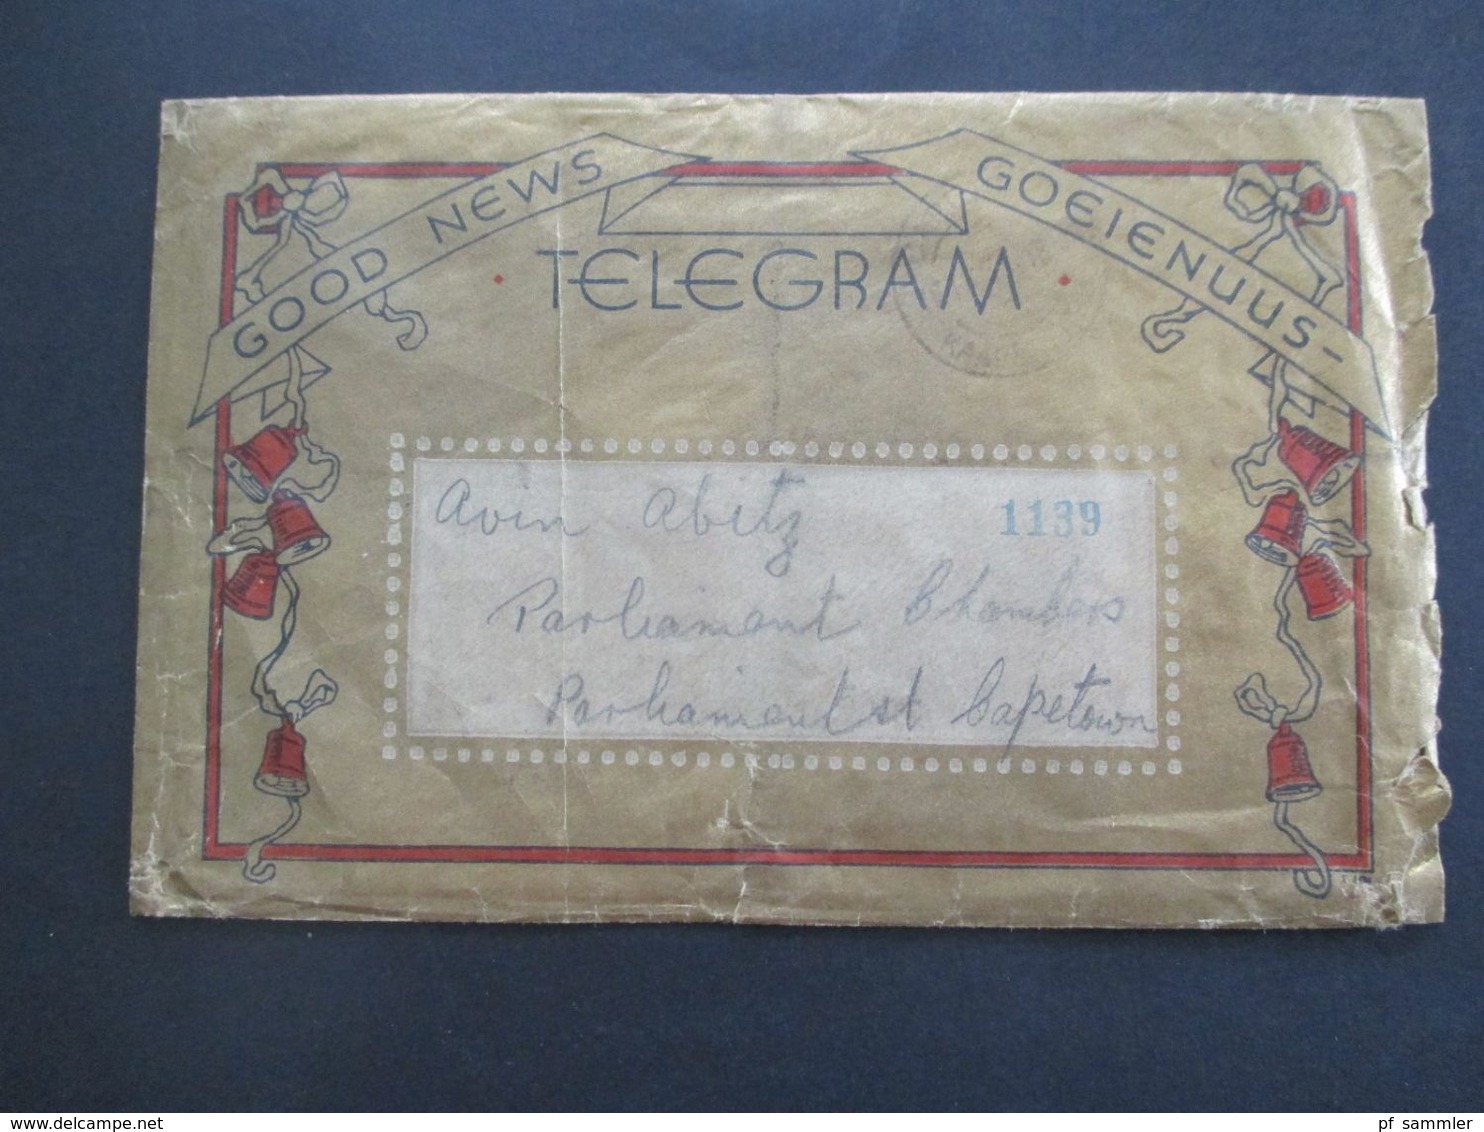 Südafrika Um 1930 ?! Telegram Goldener Umschlag Good News / Goeienuus An Das Parliament Capetown - Storia Postale